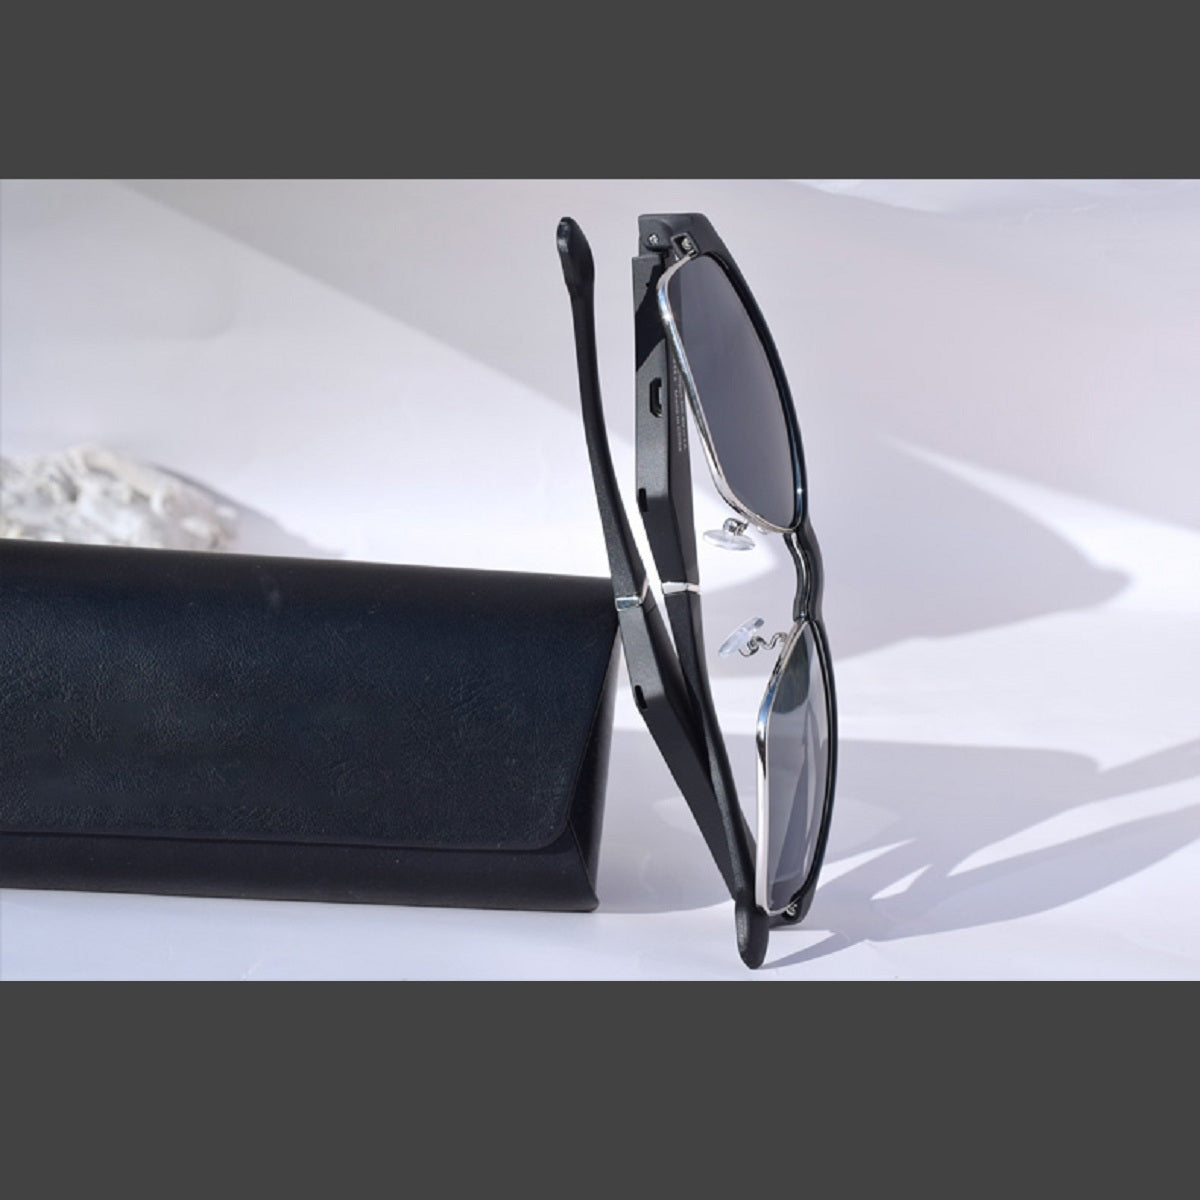 K2 Smart Bluetooth Glasses Half Frame Glasses